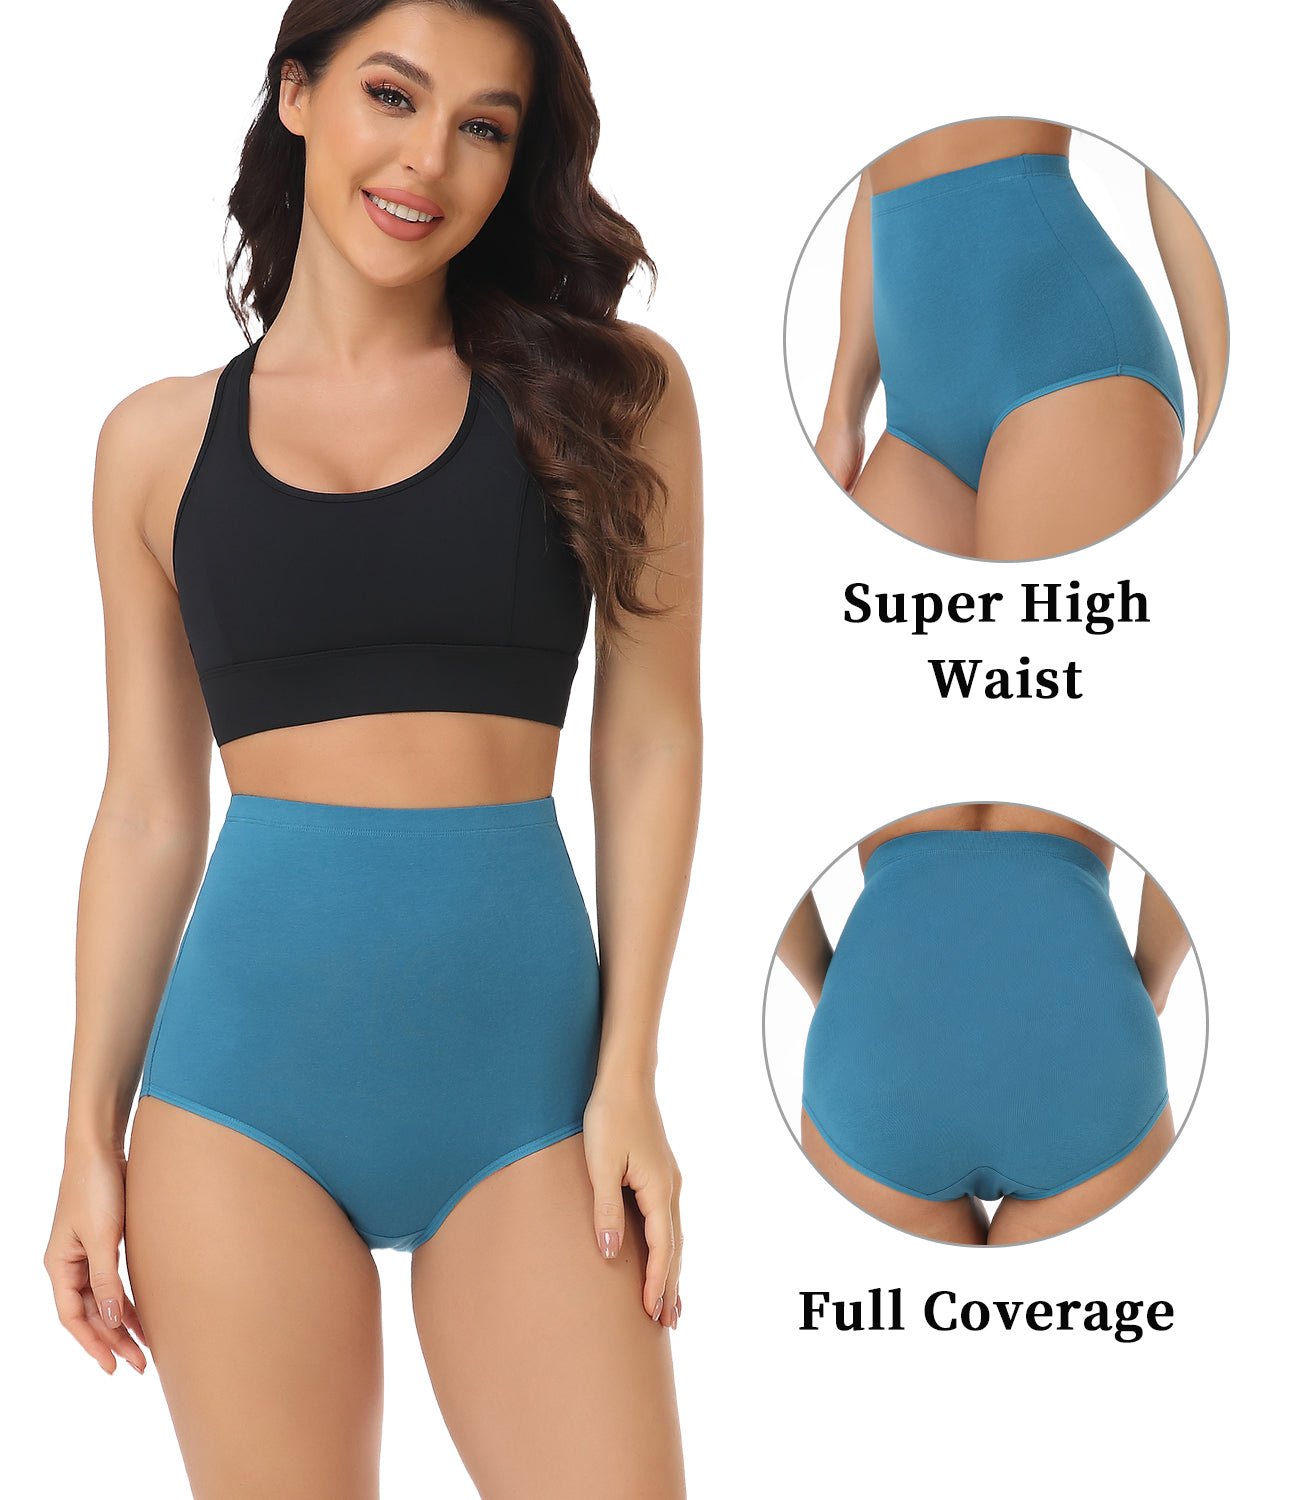 wirarpa Women's Cotton Underwear High Waist Briefs Panties Full Coverage  Underpants 5 Pack Sizes 5-10